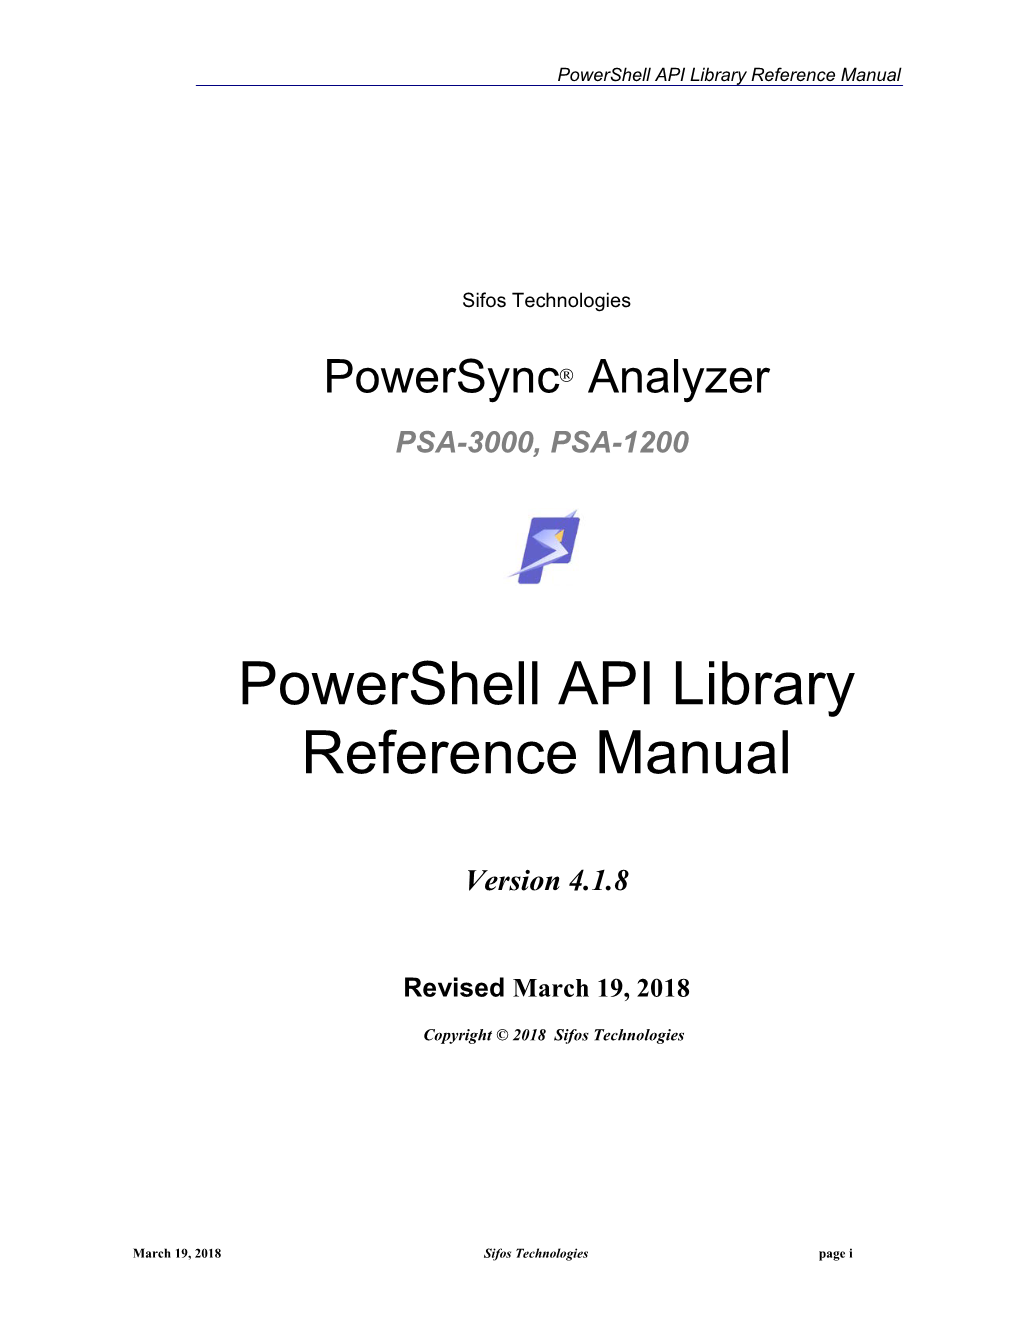 Powershell API Library Reference Manual 4.1.8